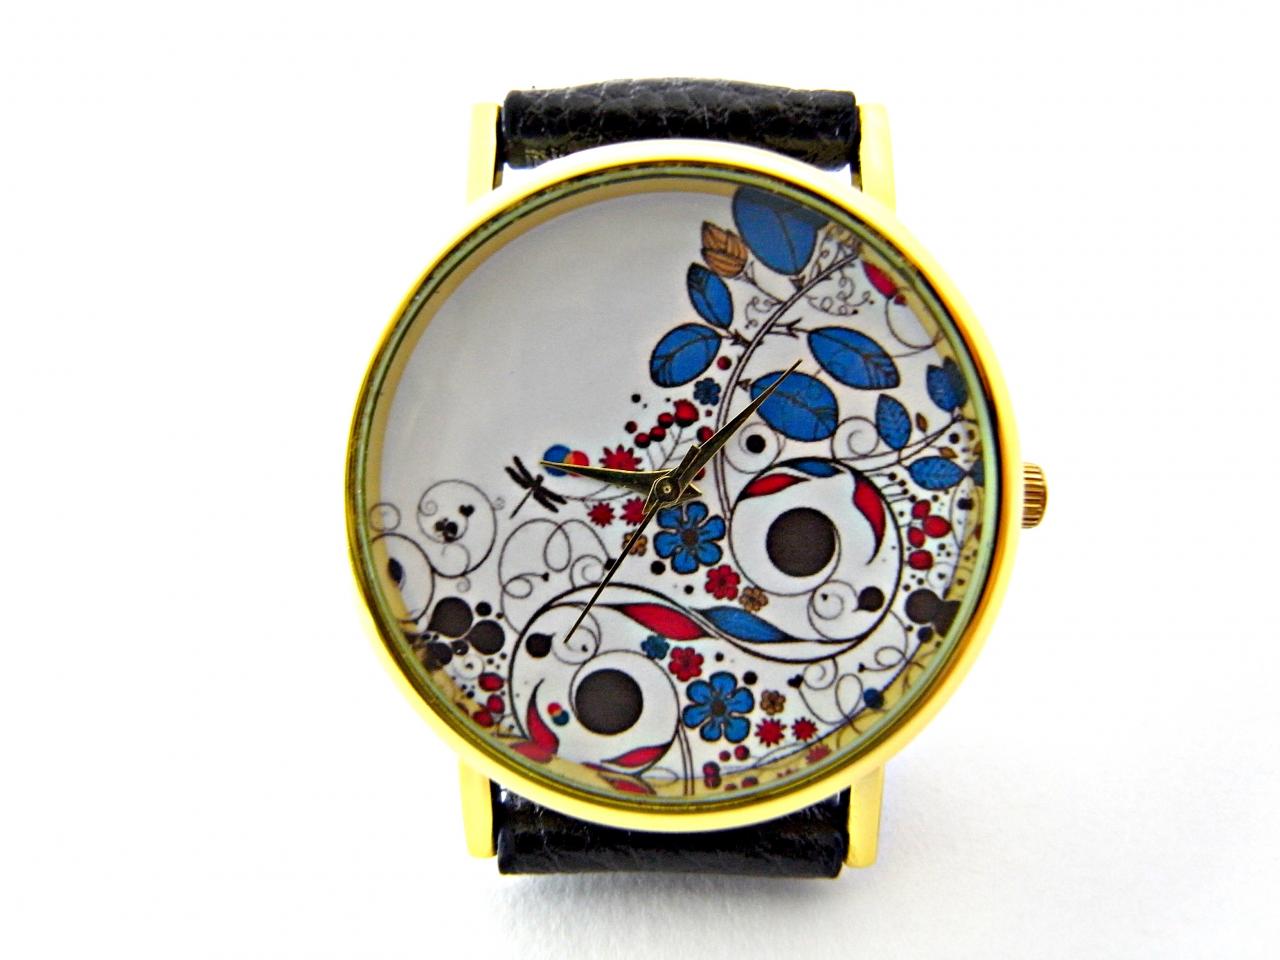 Flower Leather Wrist Watches, Woman Man Lady Unisex Watch, Genuine Leather Handmade Unique Watch #40